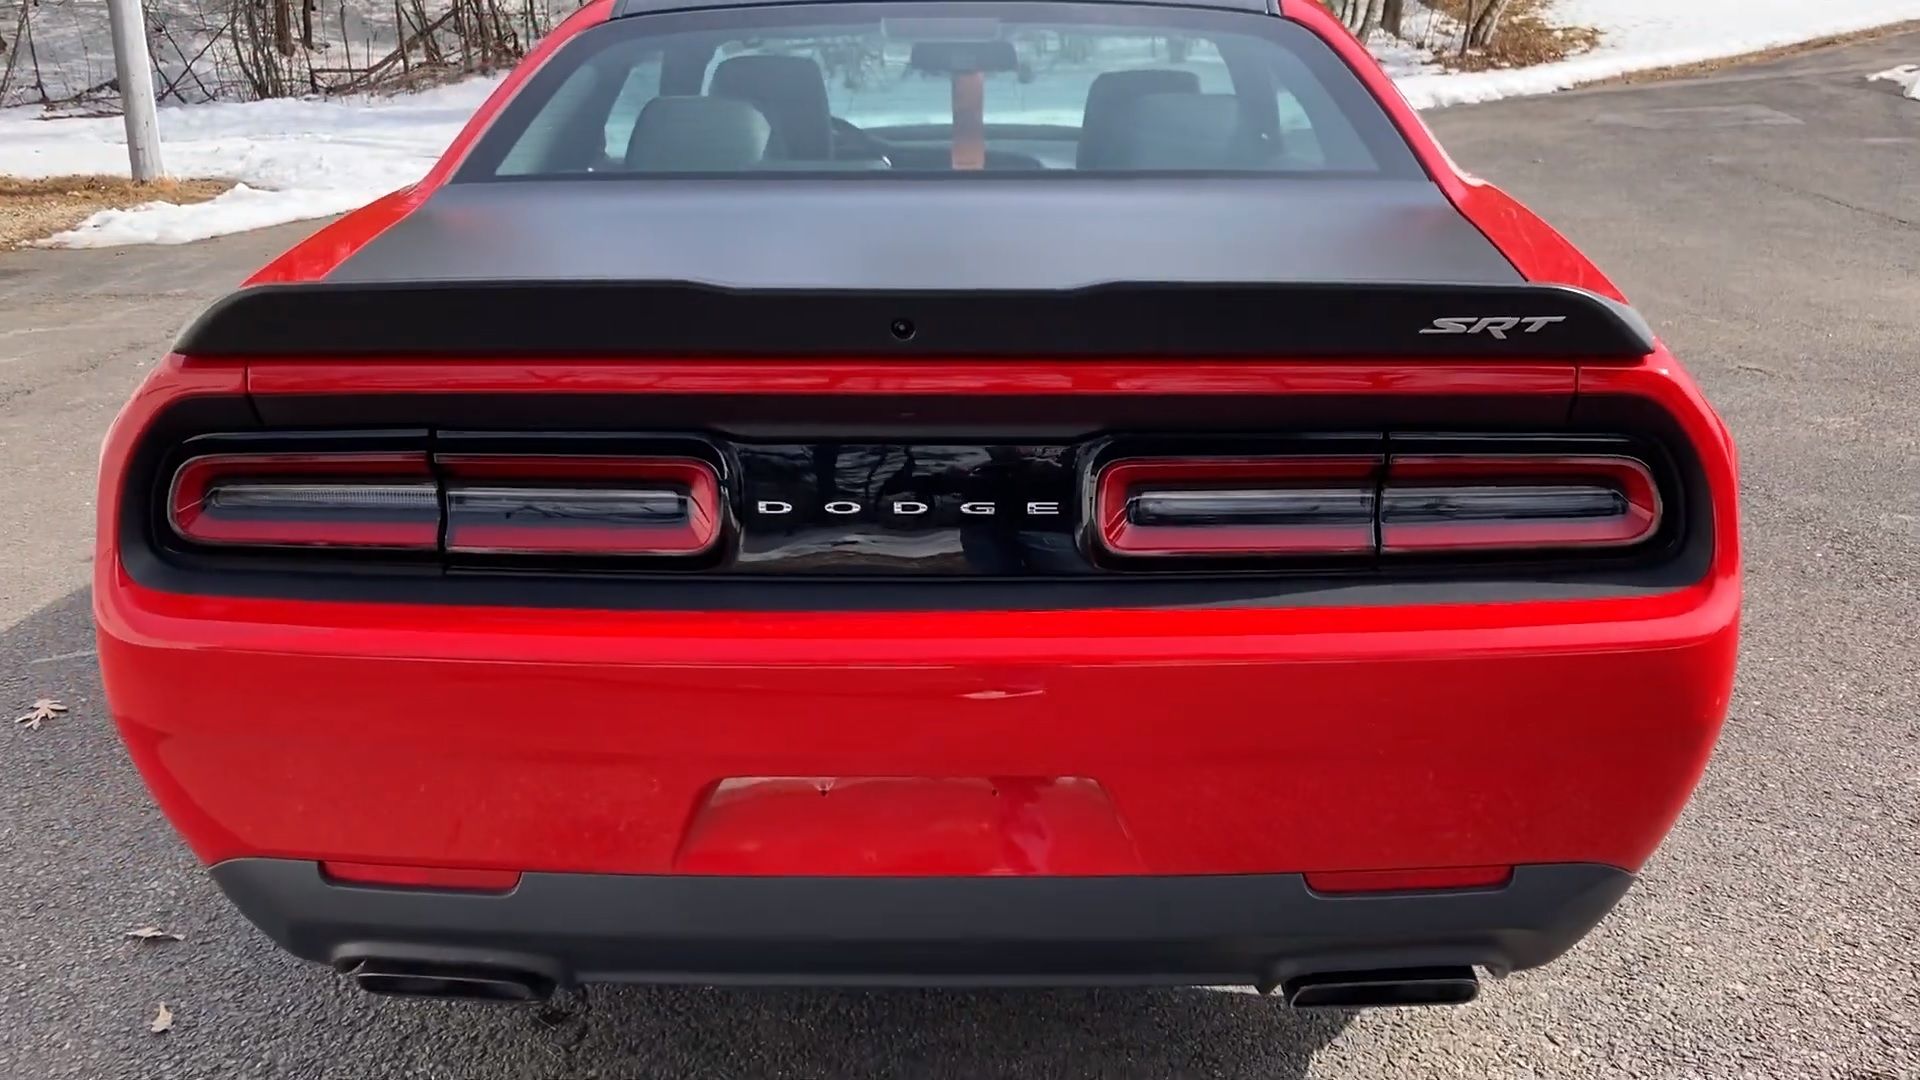 28-mile Dodge Demon for sale, red, rear profile